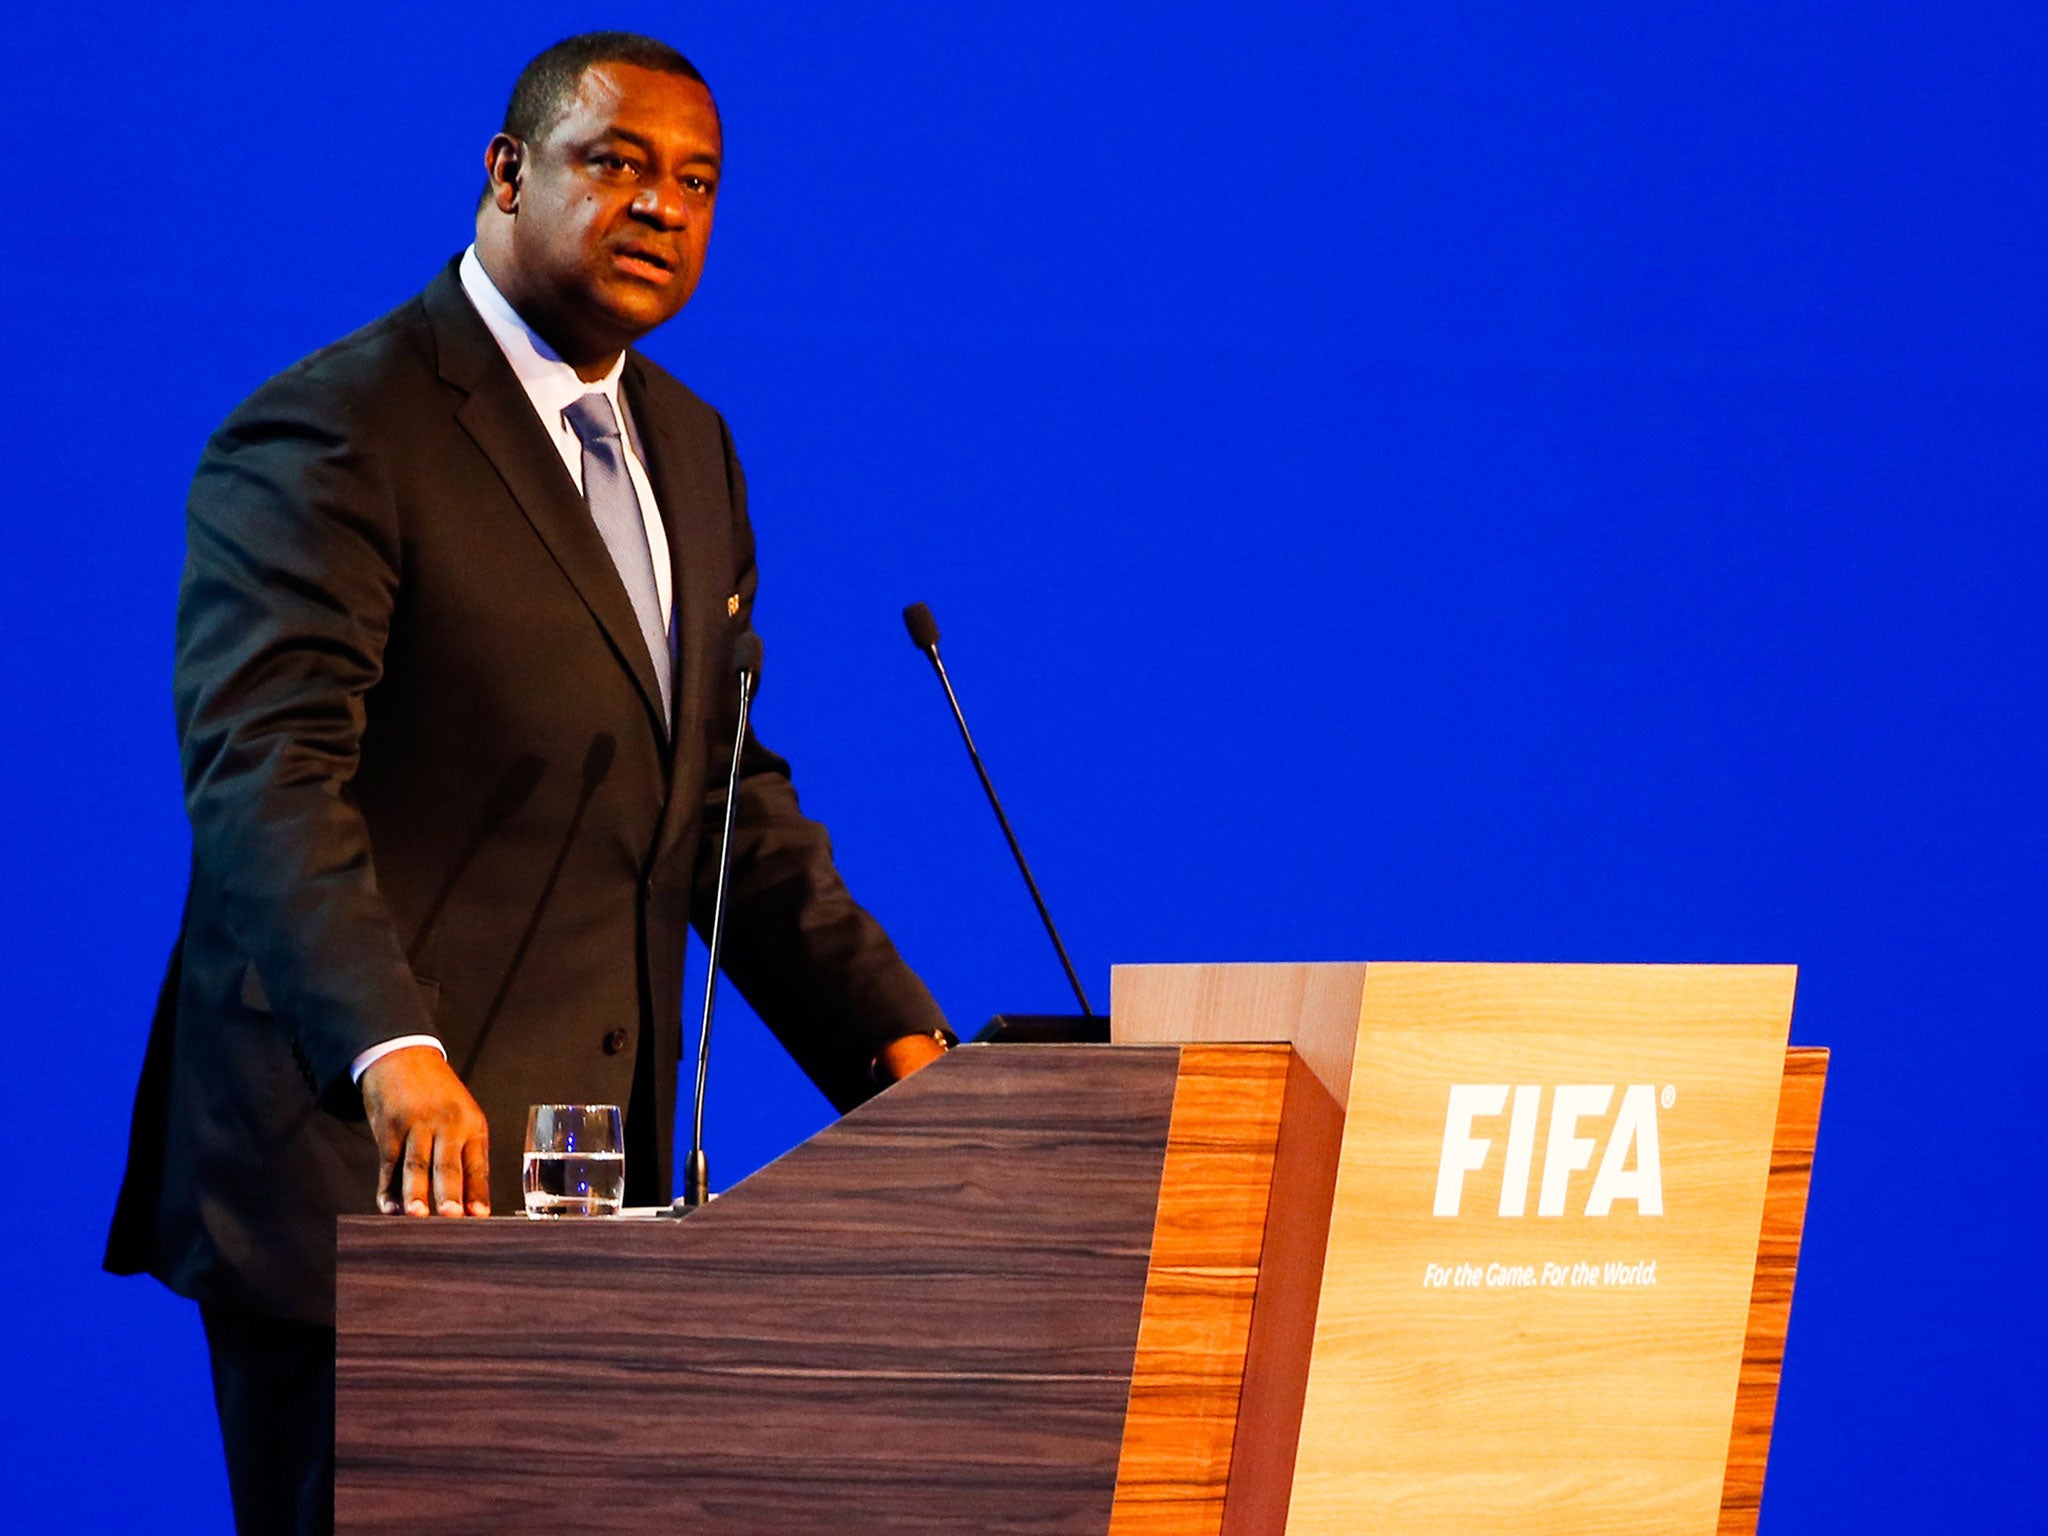 Chairman of the FIFA Jeffrey Webb